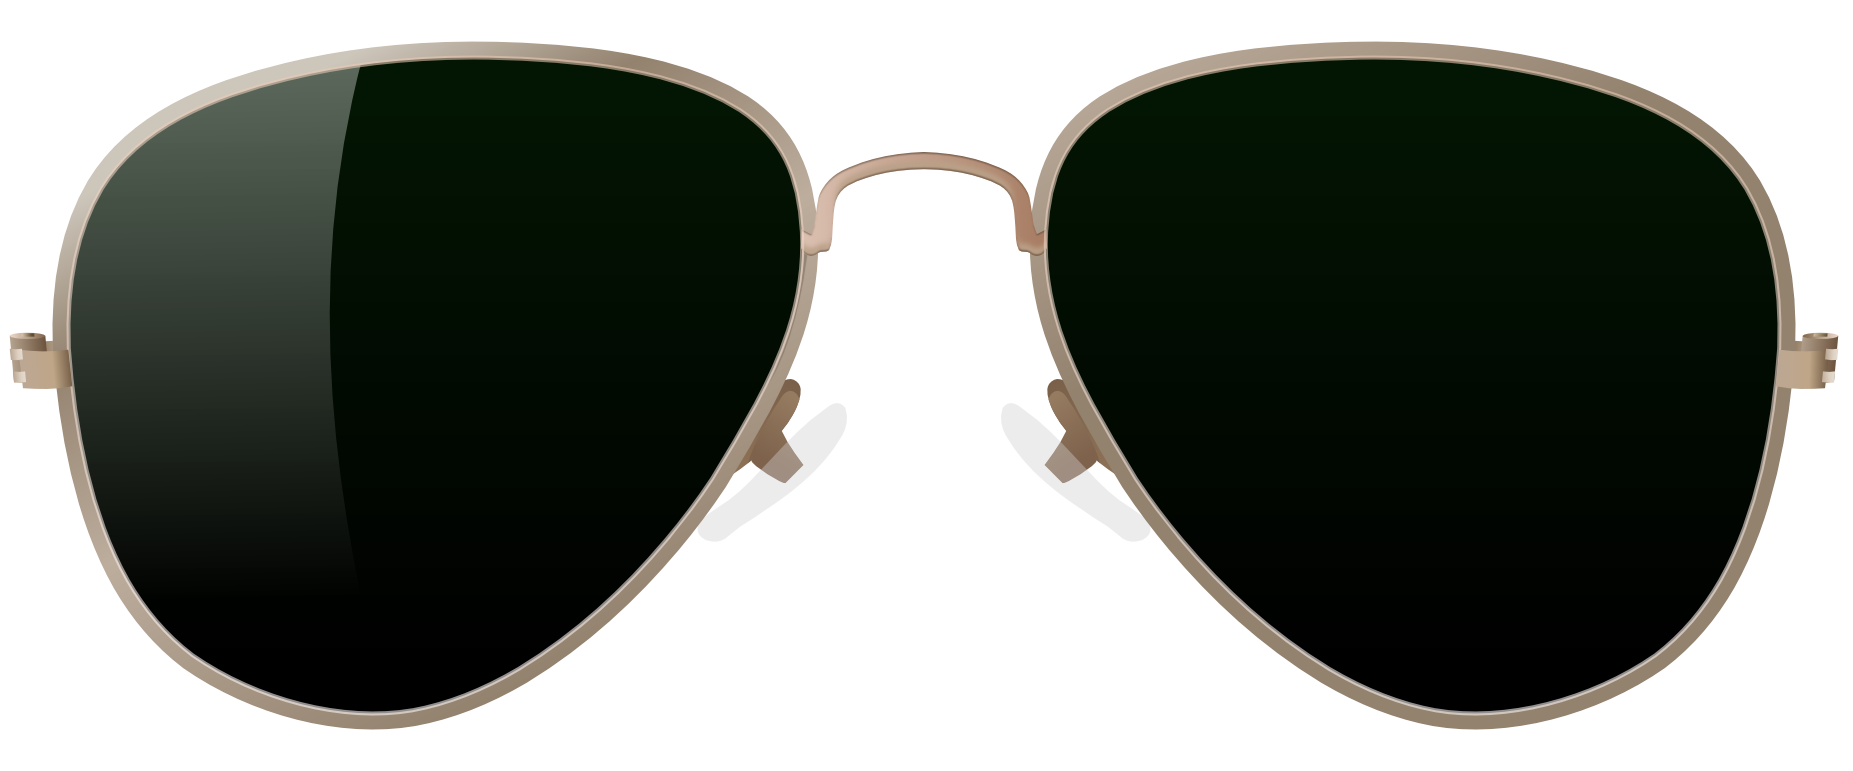 Aviator sunglasses Eyewear Ray-Ban - Sunglasses Free Download Png png ...